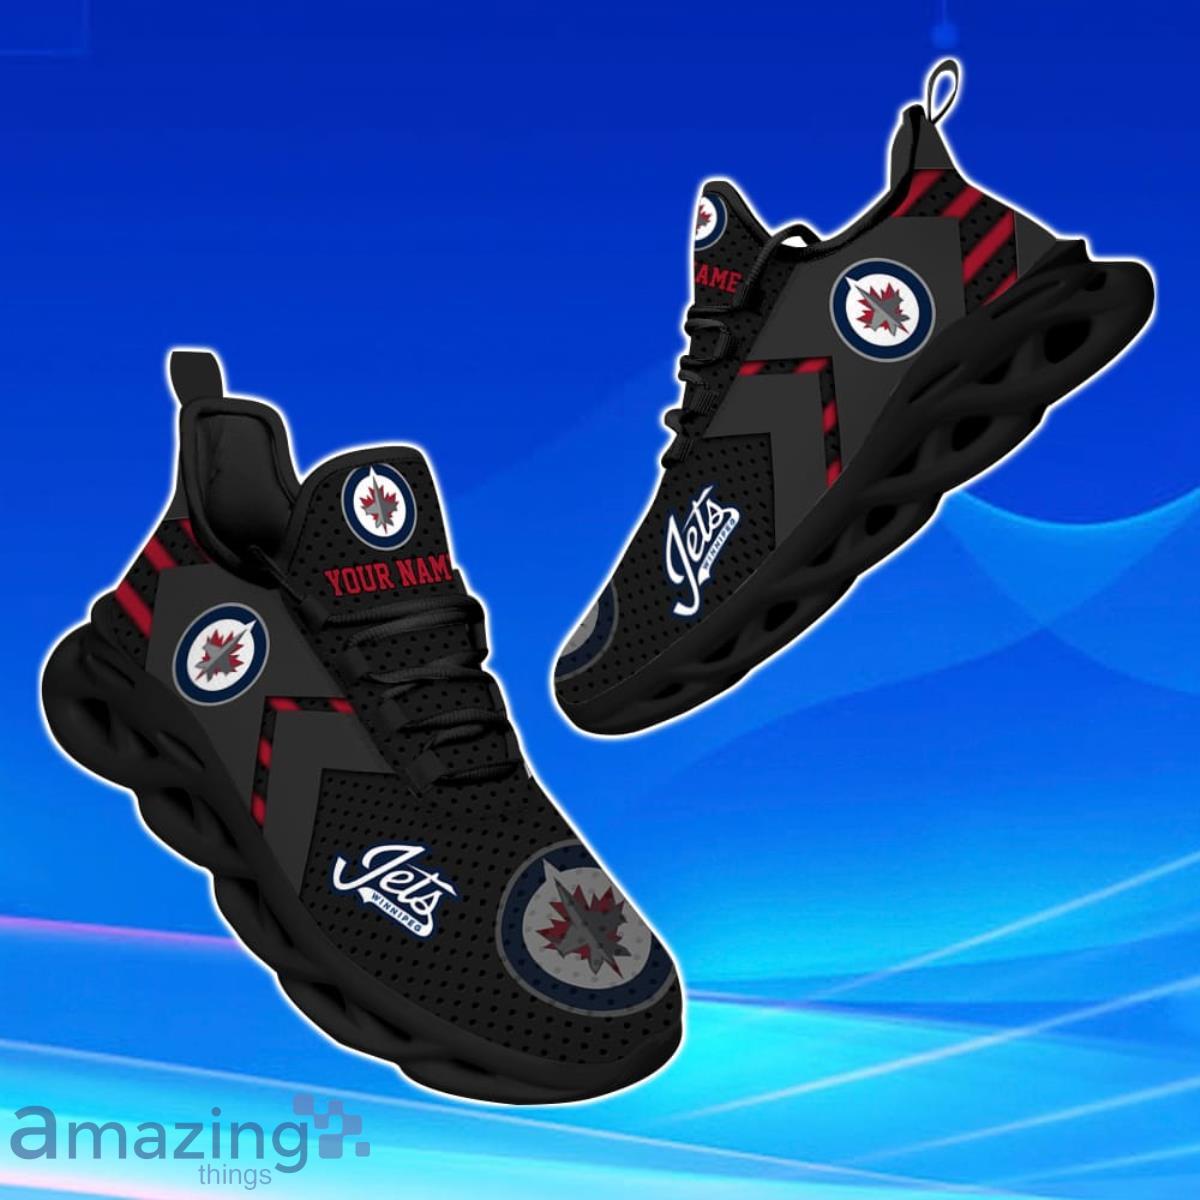 NHL Winnipeg Jets Max Soul Shoes Custom Name For NHL Fans Running Shoes -  Freedomdesign